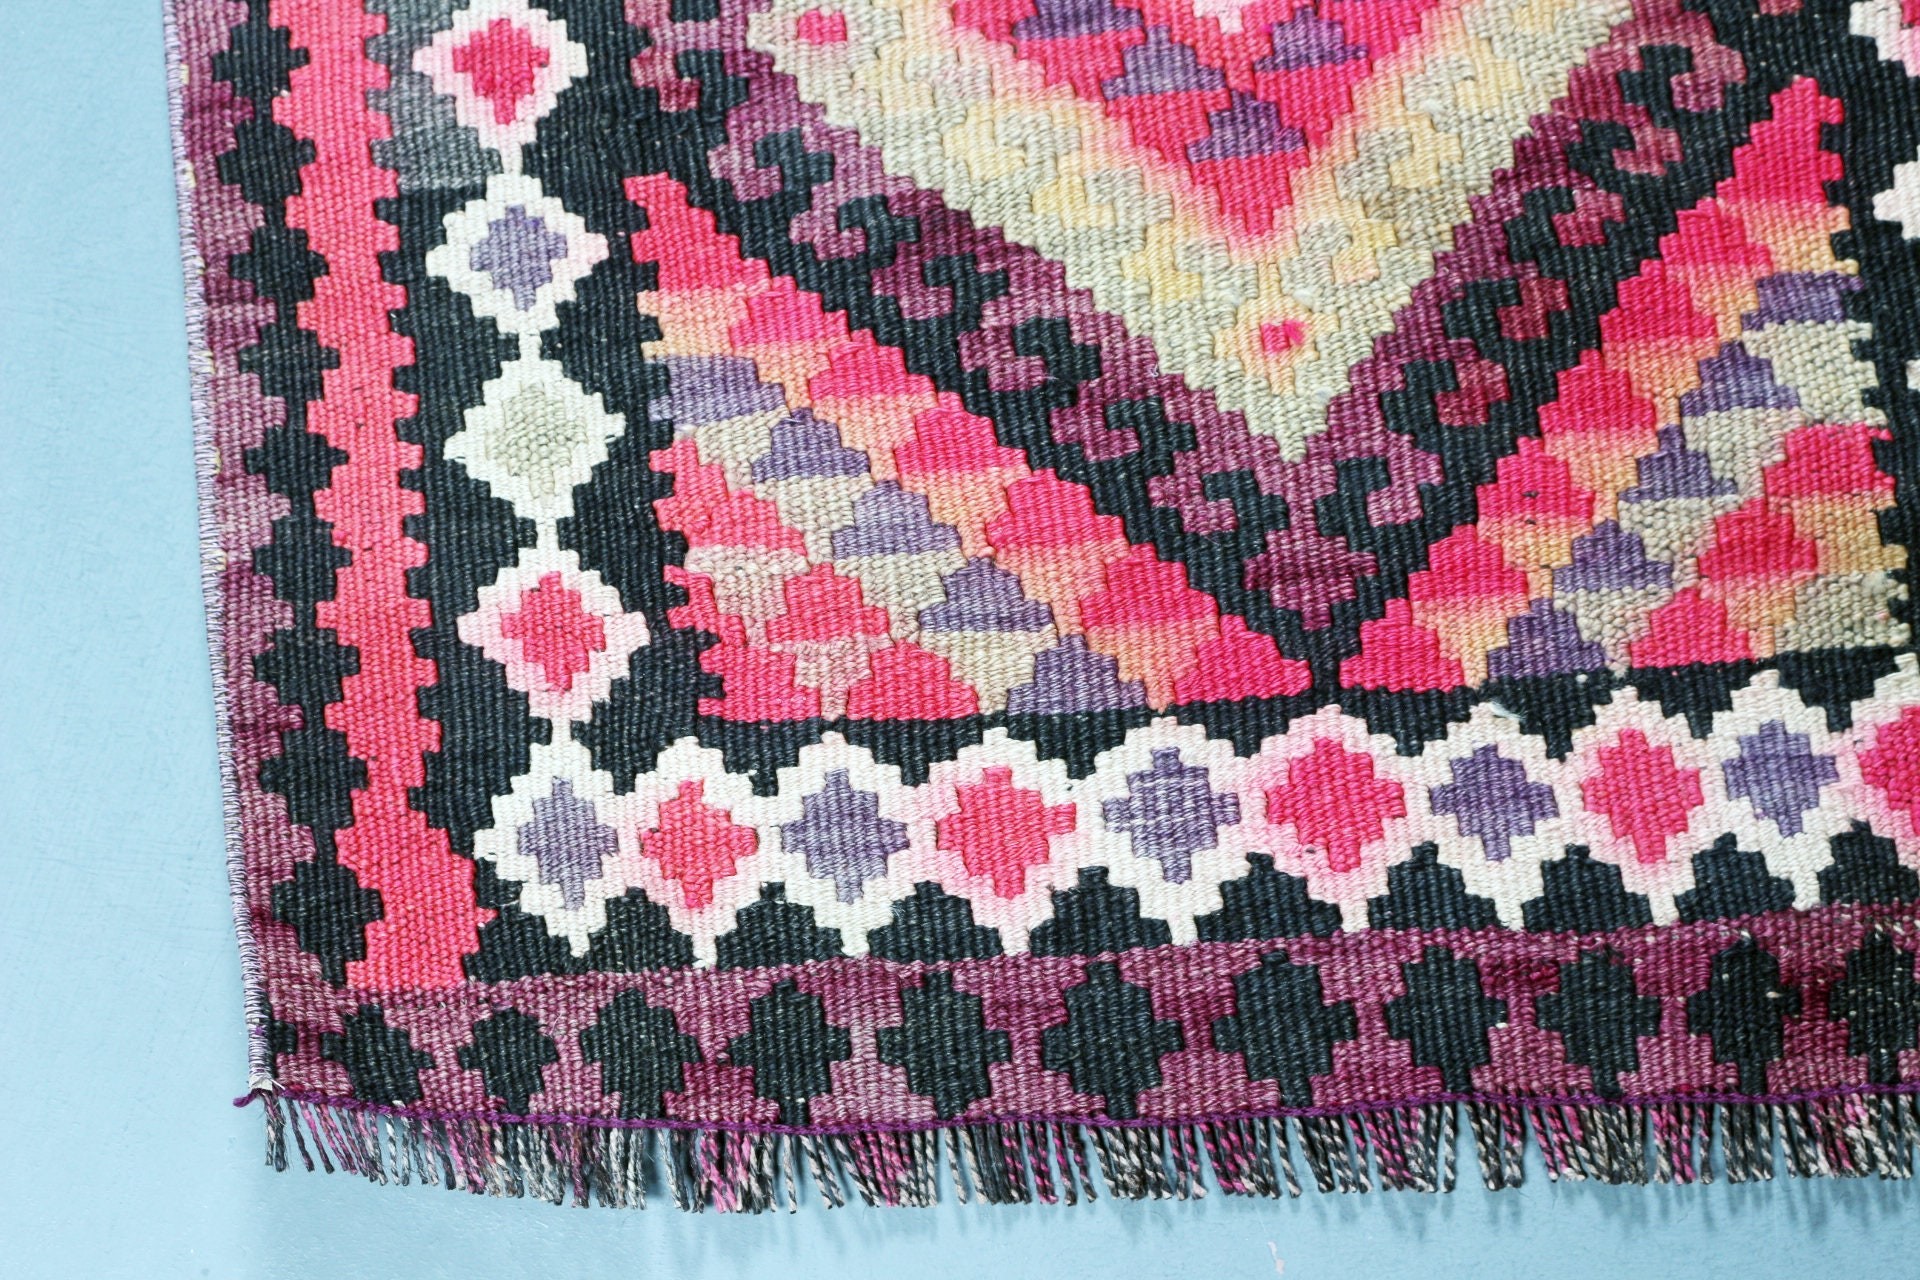 Floor Rug, Vintage Rugs, Kitchen Rugs, Muted Rug, Corridor Rug, Pink Home Decor Rug, 2.5x10.6 ft Runner Rug, Antique Rugs, Turkish Rugs